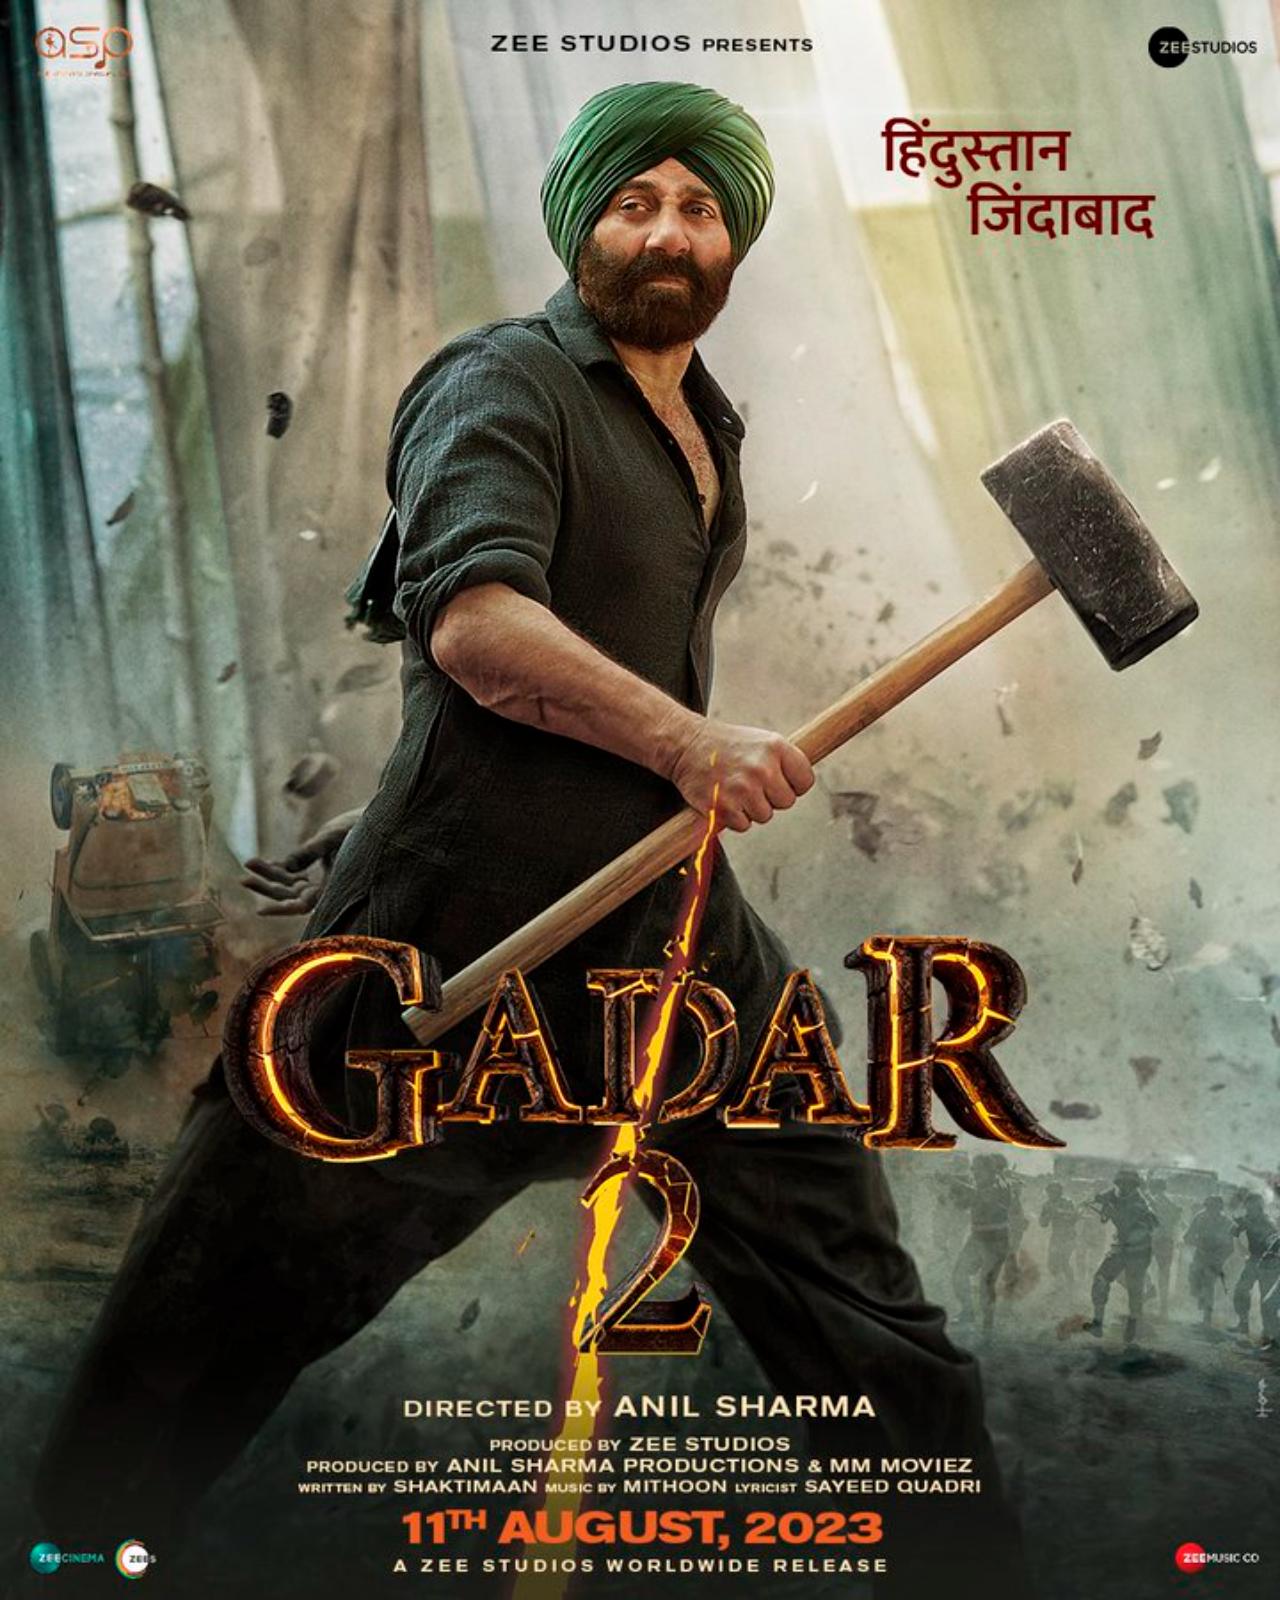 Gadar 2 (Gadar: The Katha Continues) (August 11, 2023)
'Gadar 2' is the sequel to the 2001 romantic action film 'Gadar: Ek Prem Katha.' The film stars Sunny Deol, Amisha Patel, and Utkarsh Sharma. 'Gadar 2' is slated to release on August 11, 2023.